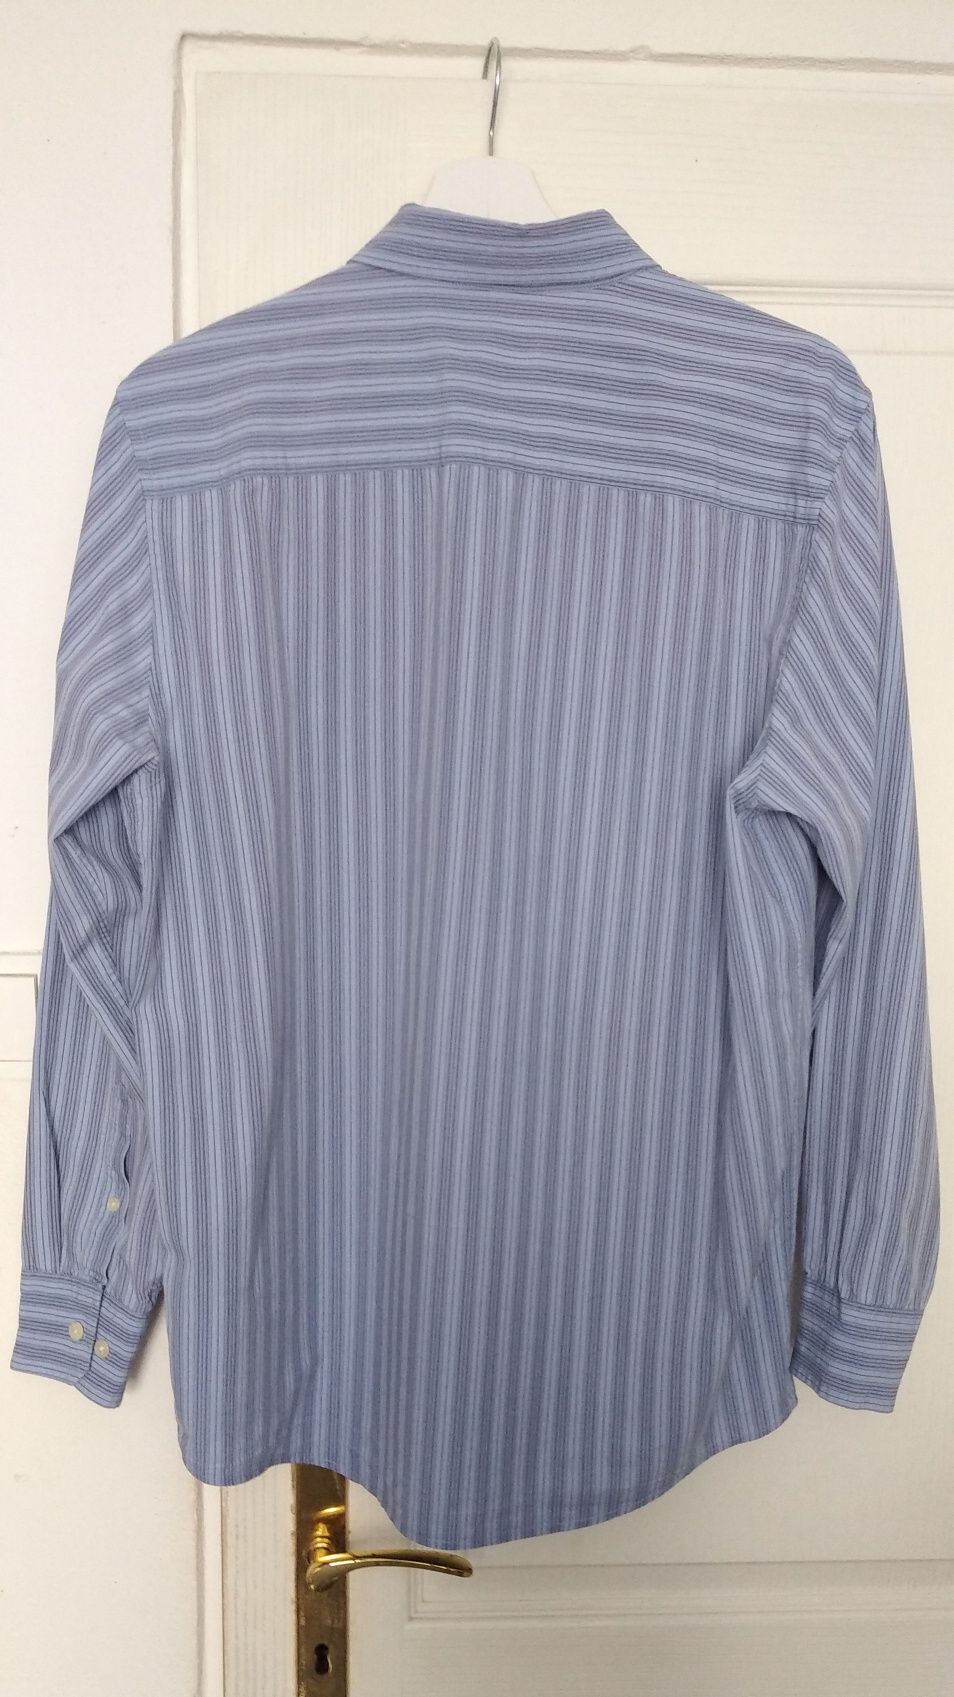 Lux męska / unisex Calvin Klein koszula niebieska błękitna oversize 38